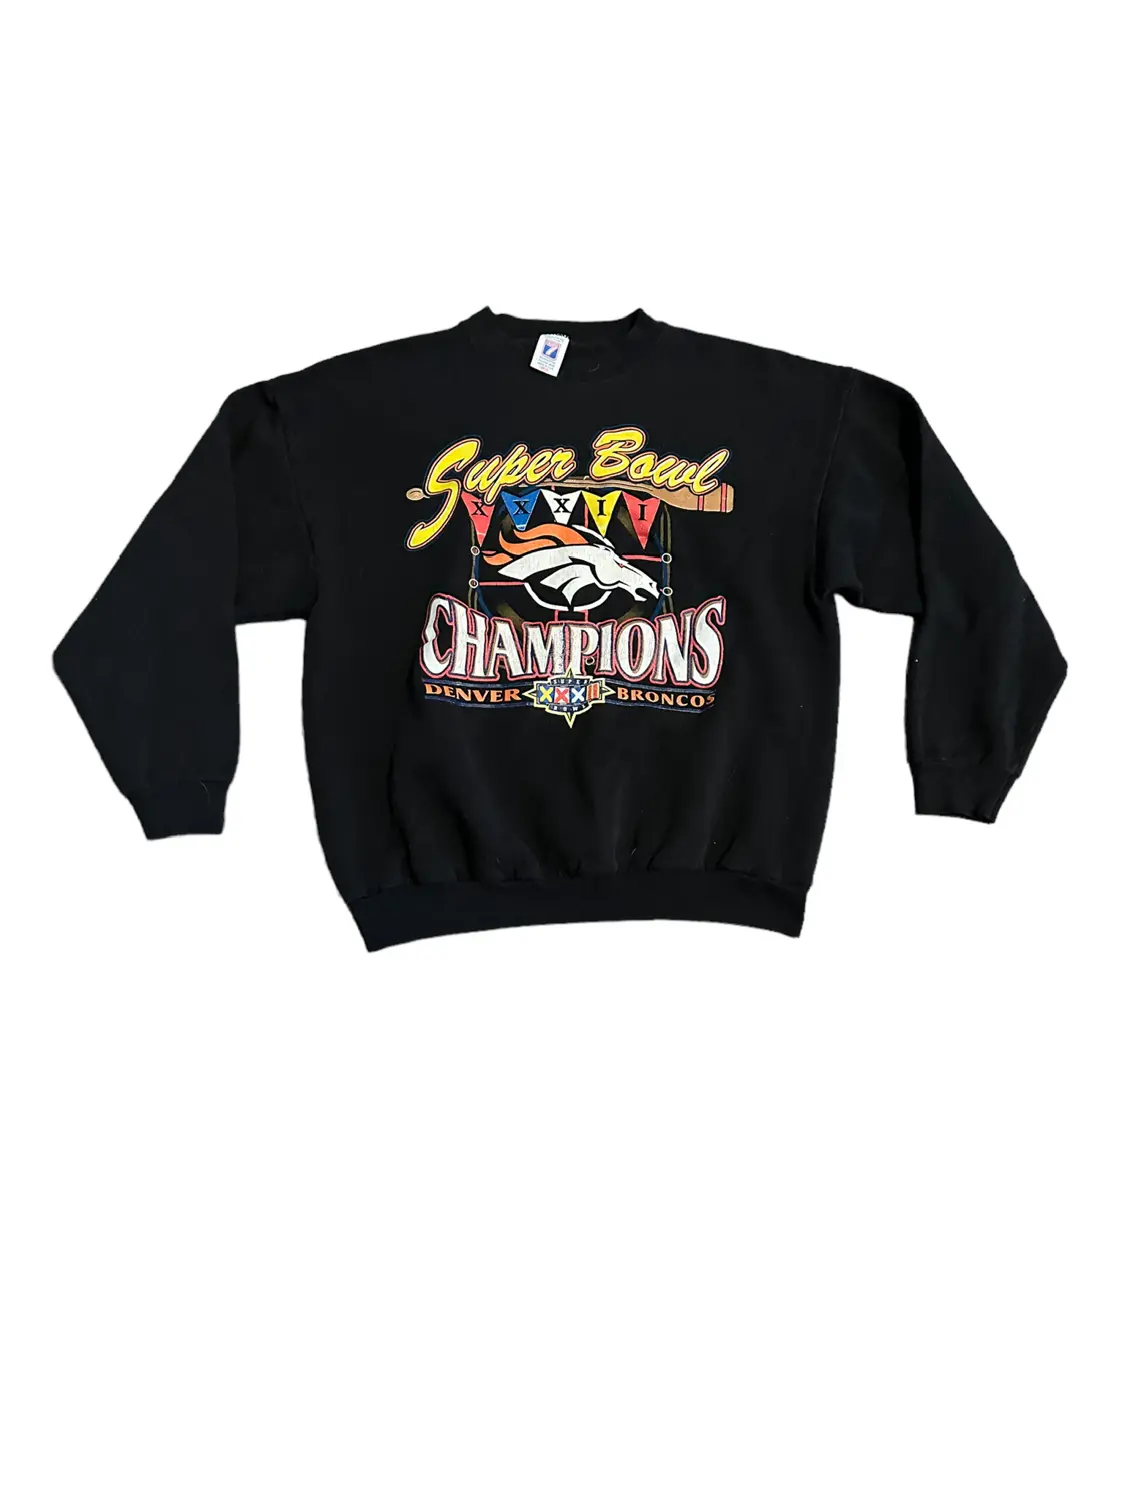 Broncos Super Bowl sweatshirt